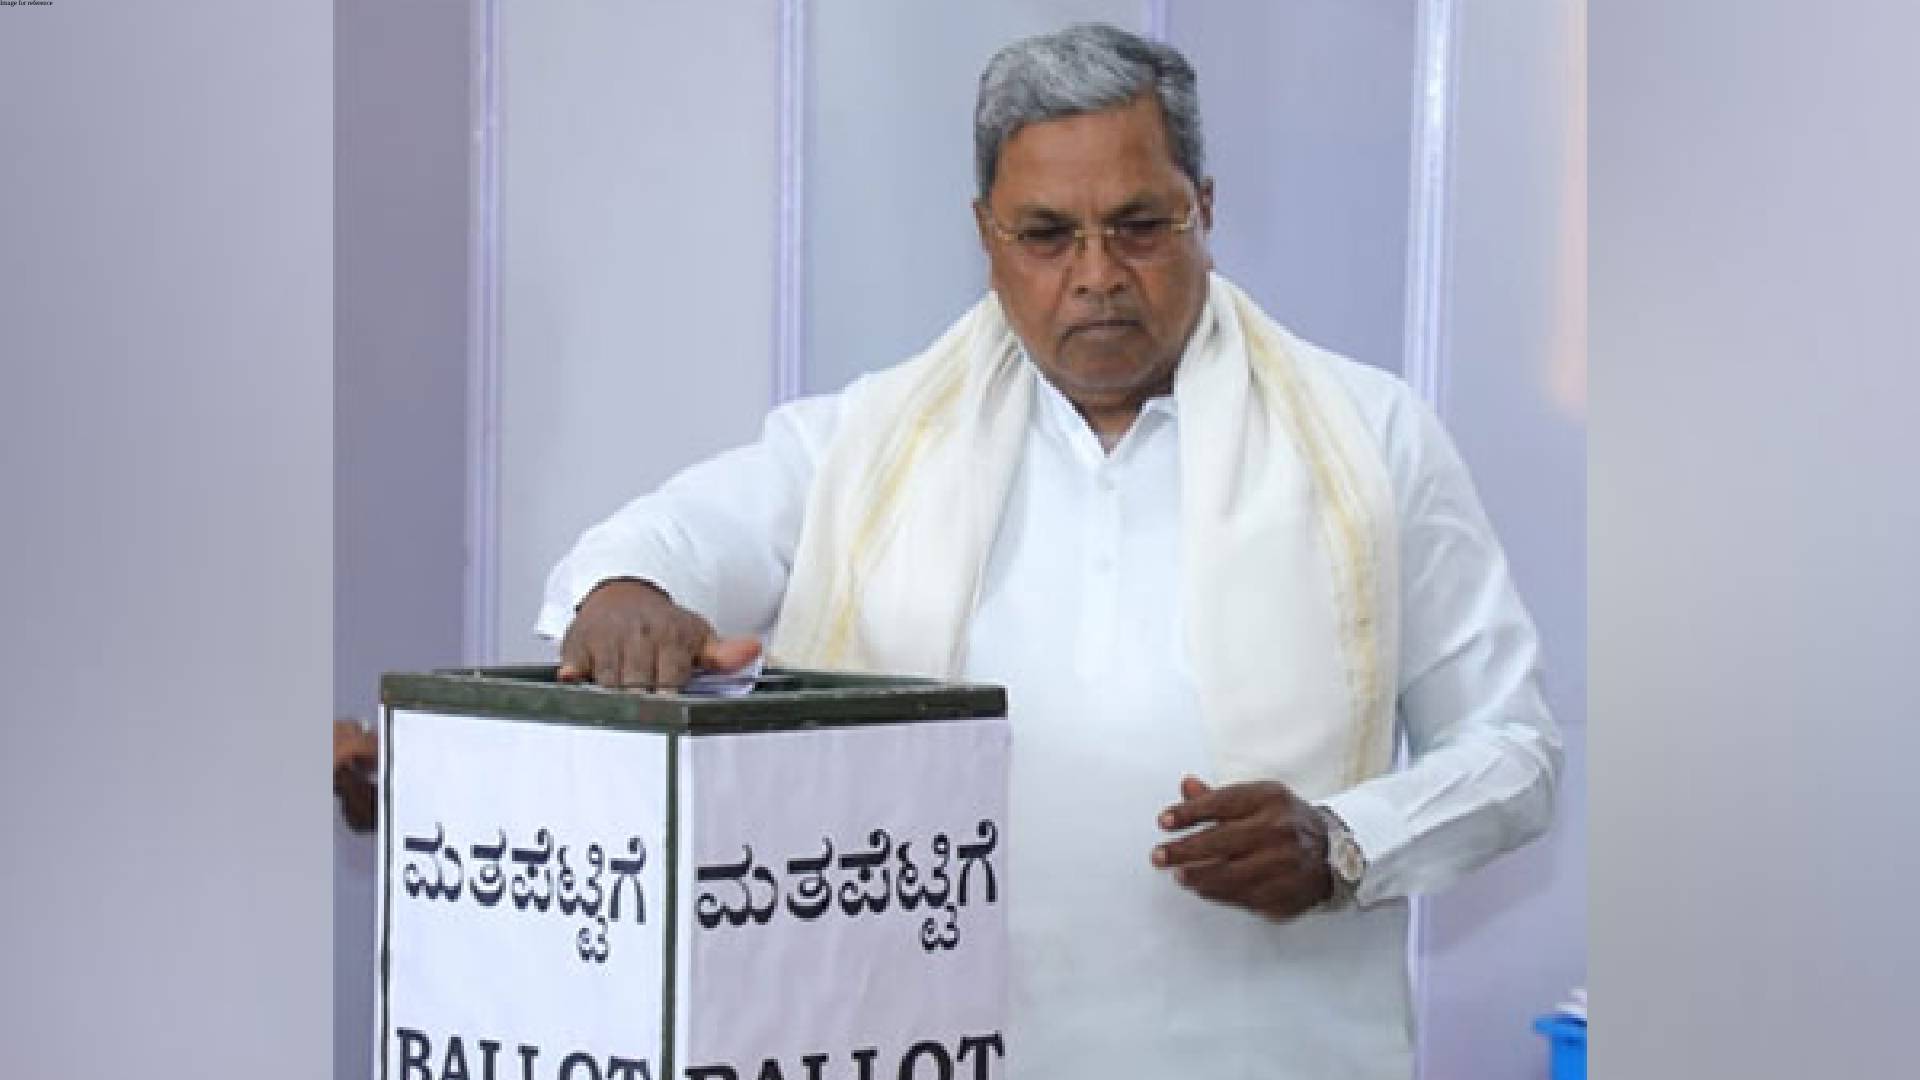 Karnataka CM Siddaramaiah casts his vote for Rajya Sabha elections